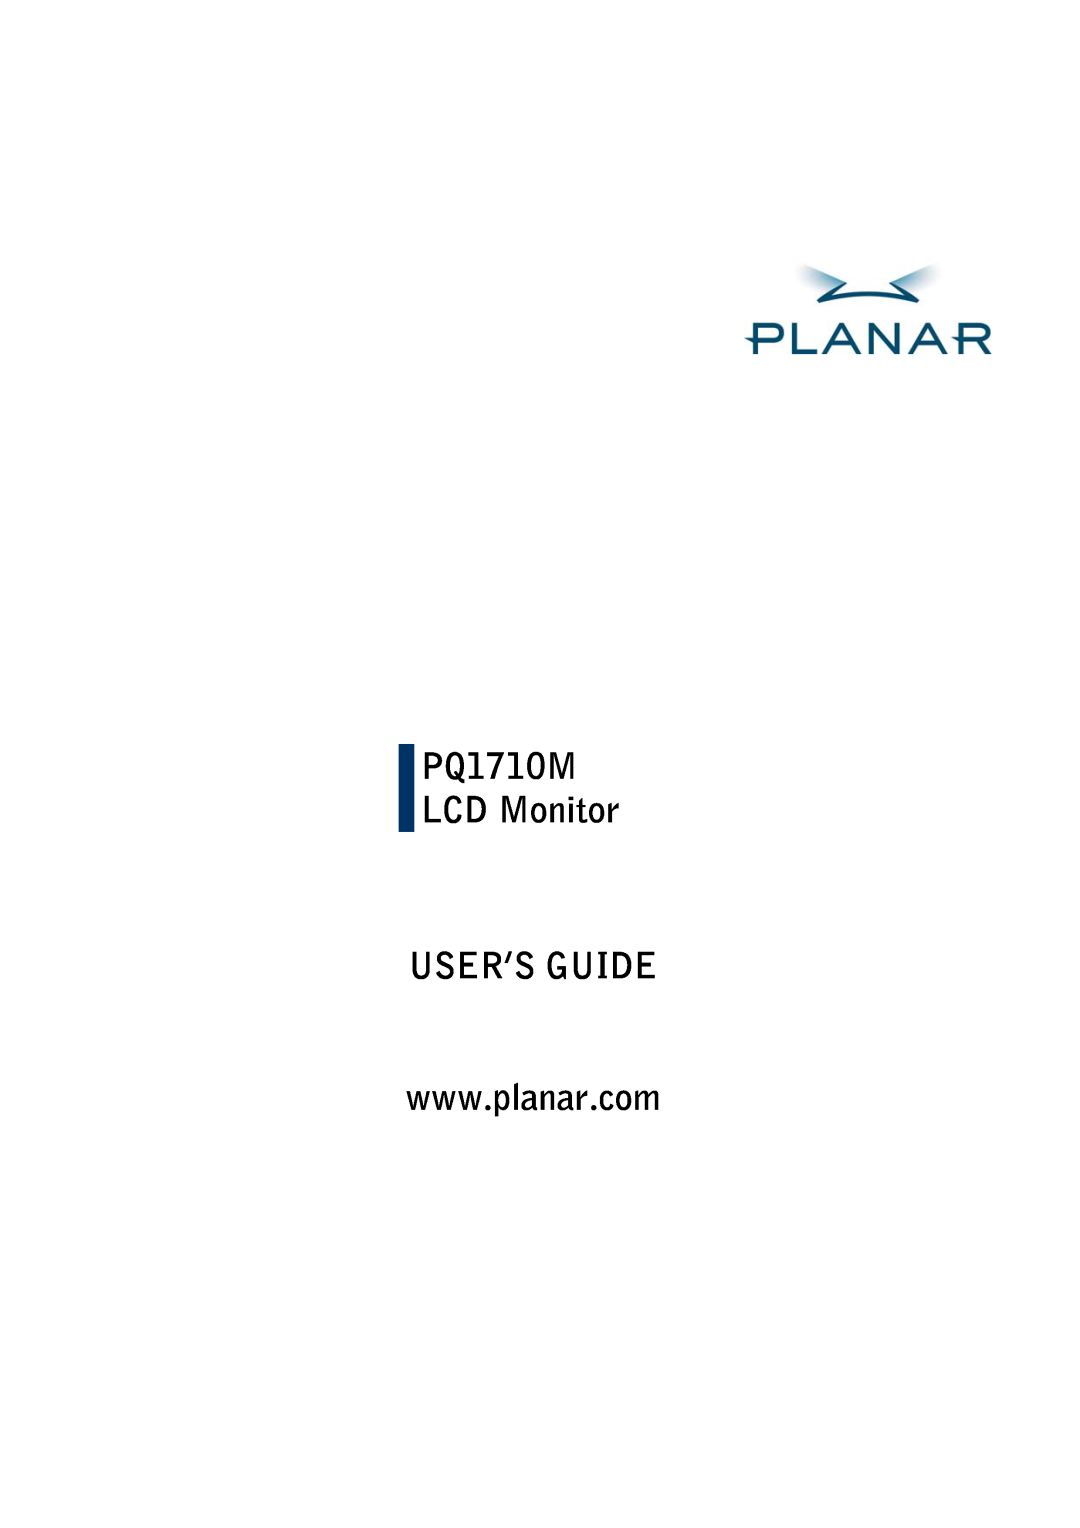 Planar manual User’S Guide, PQ1710M LCD Monitor 